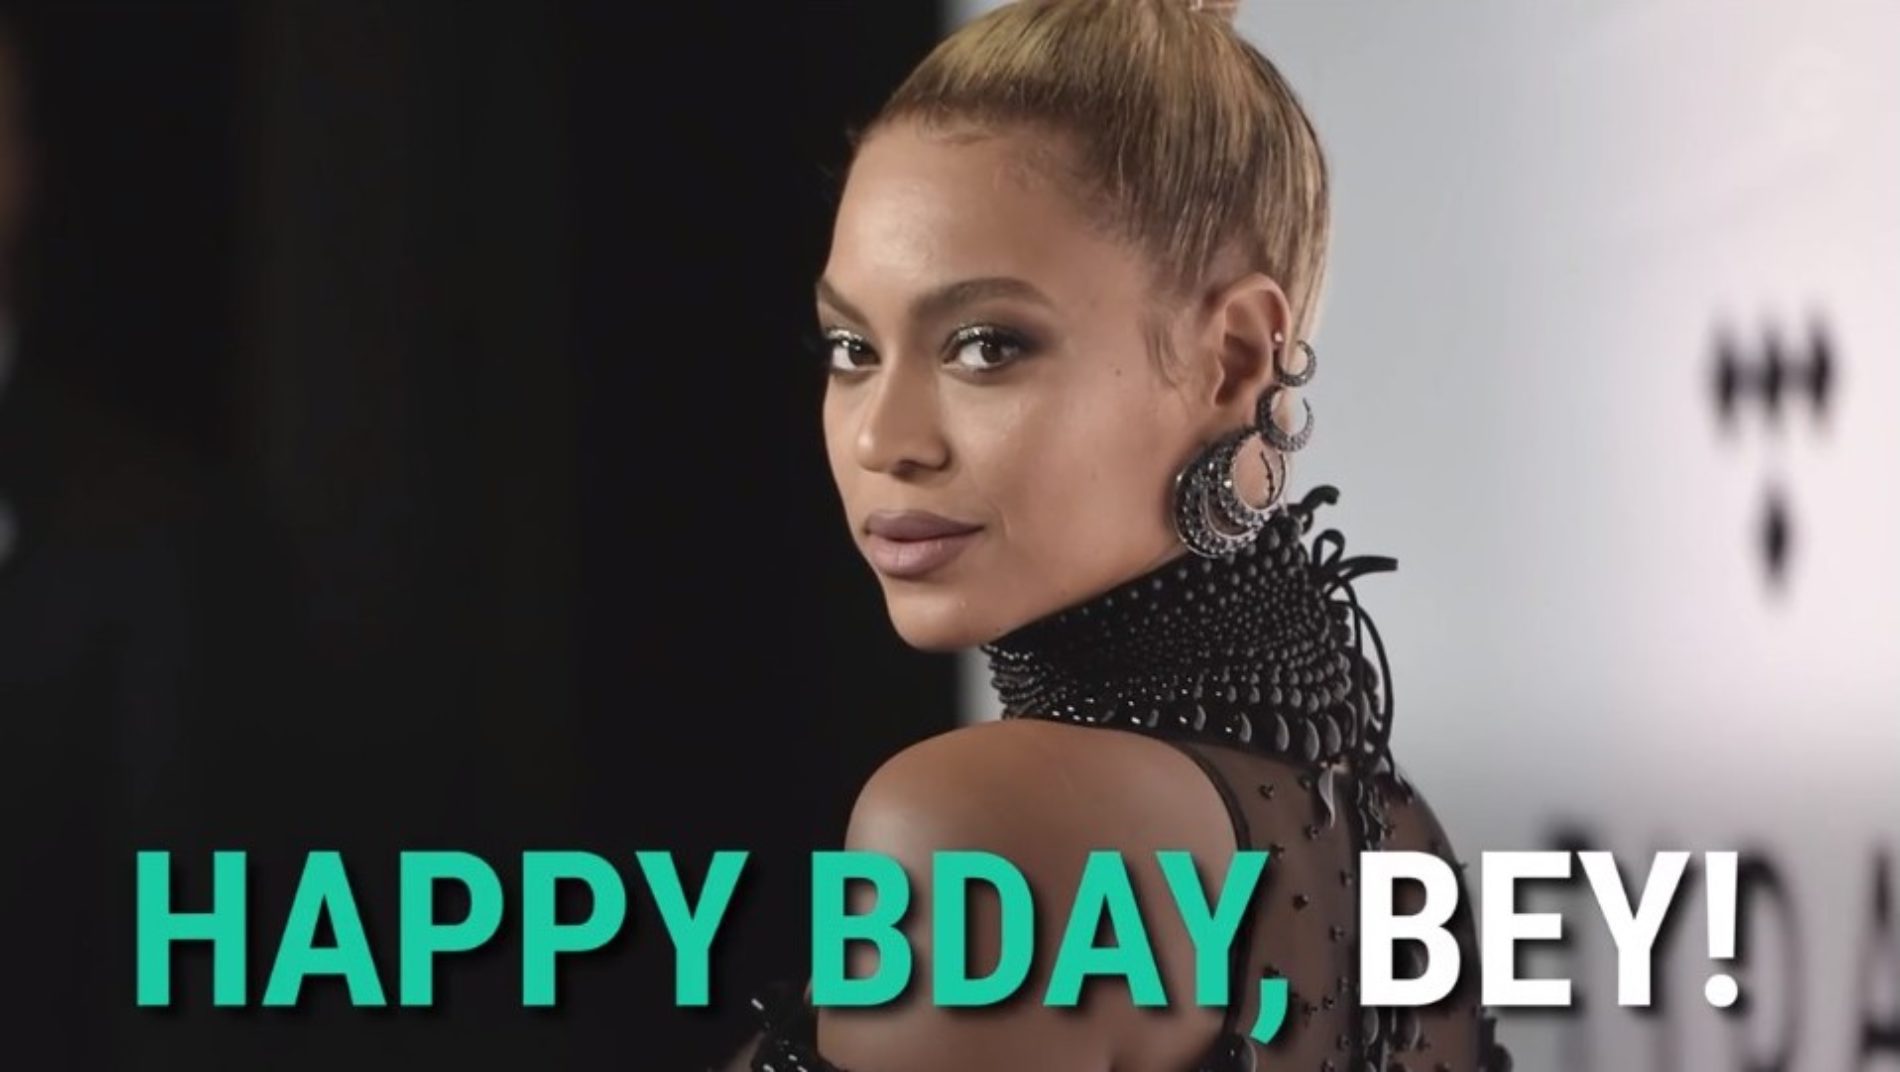 It’s Beyoncé’s Birthday Today!